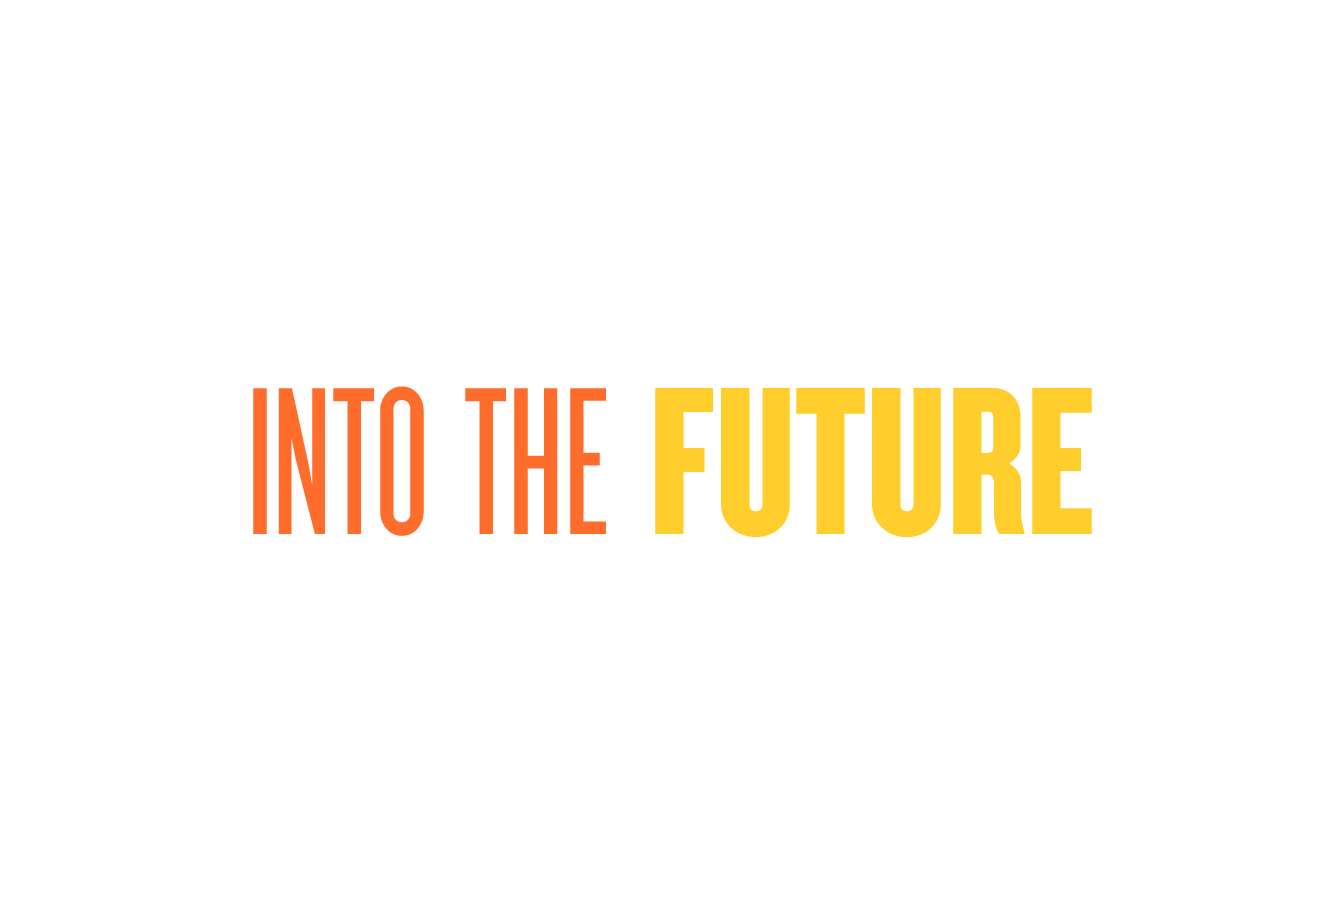 Influence the Future - Into the Future